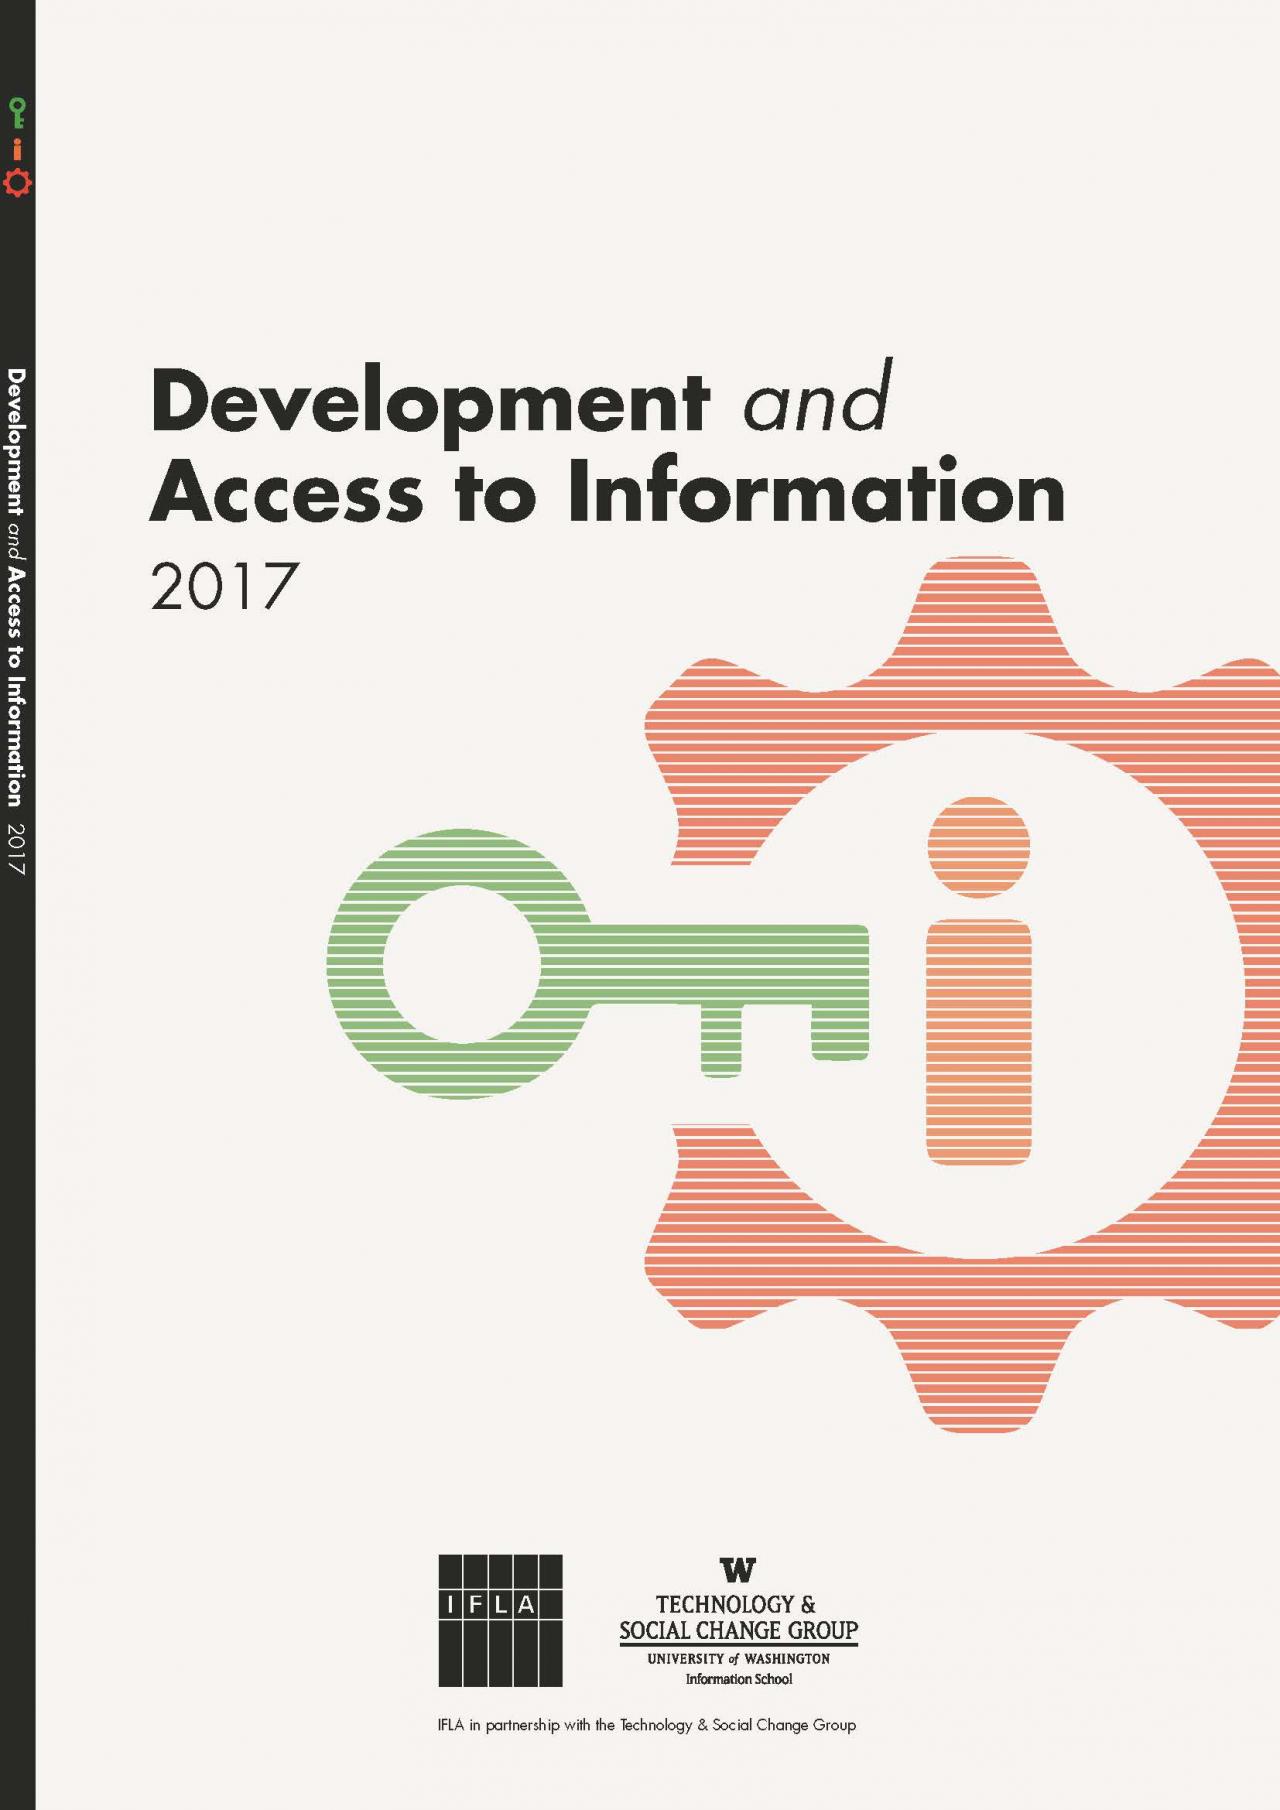 Development and Access to Information (DA2I) Report